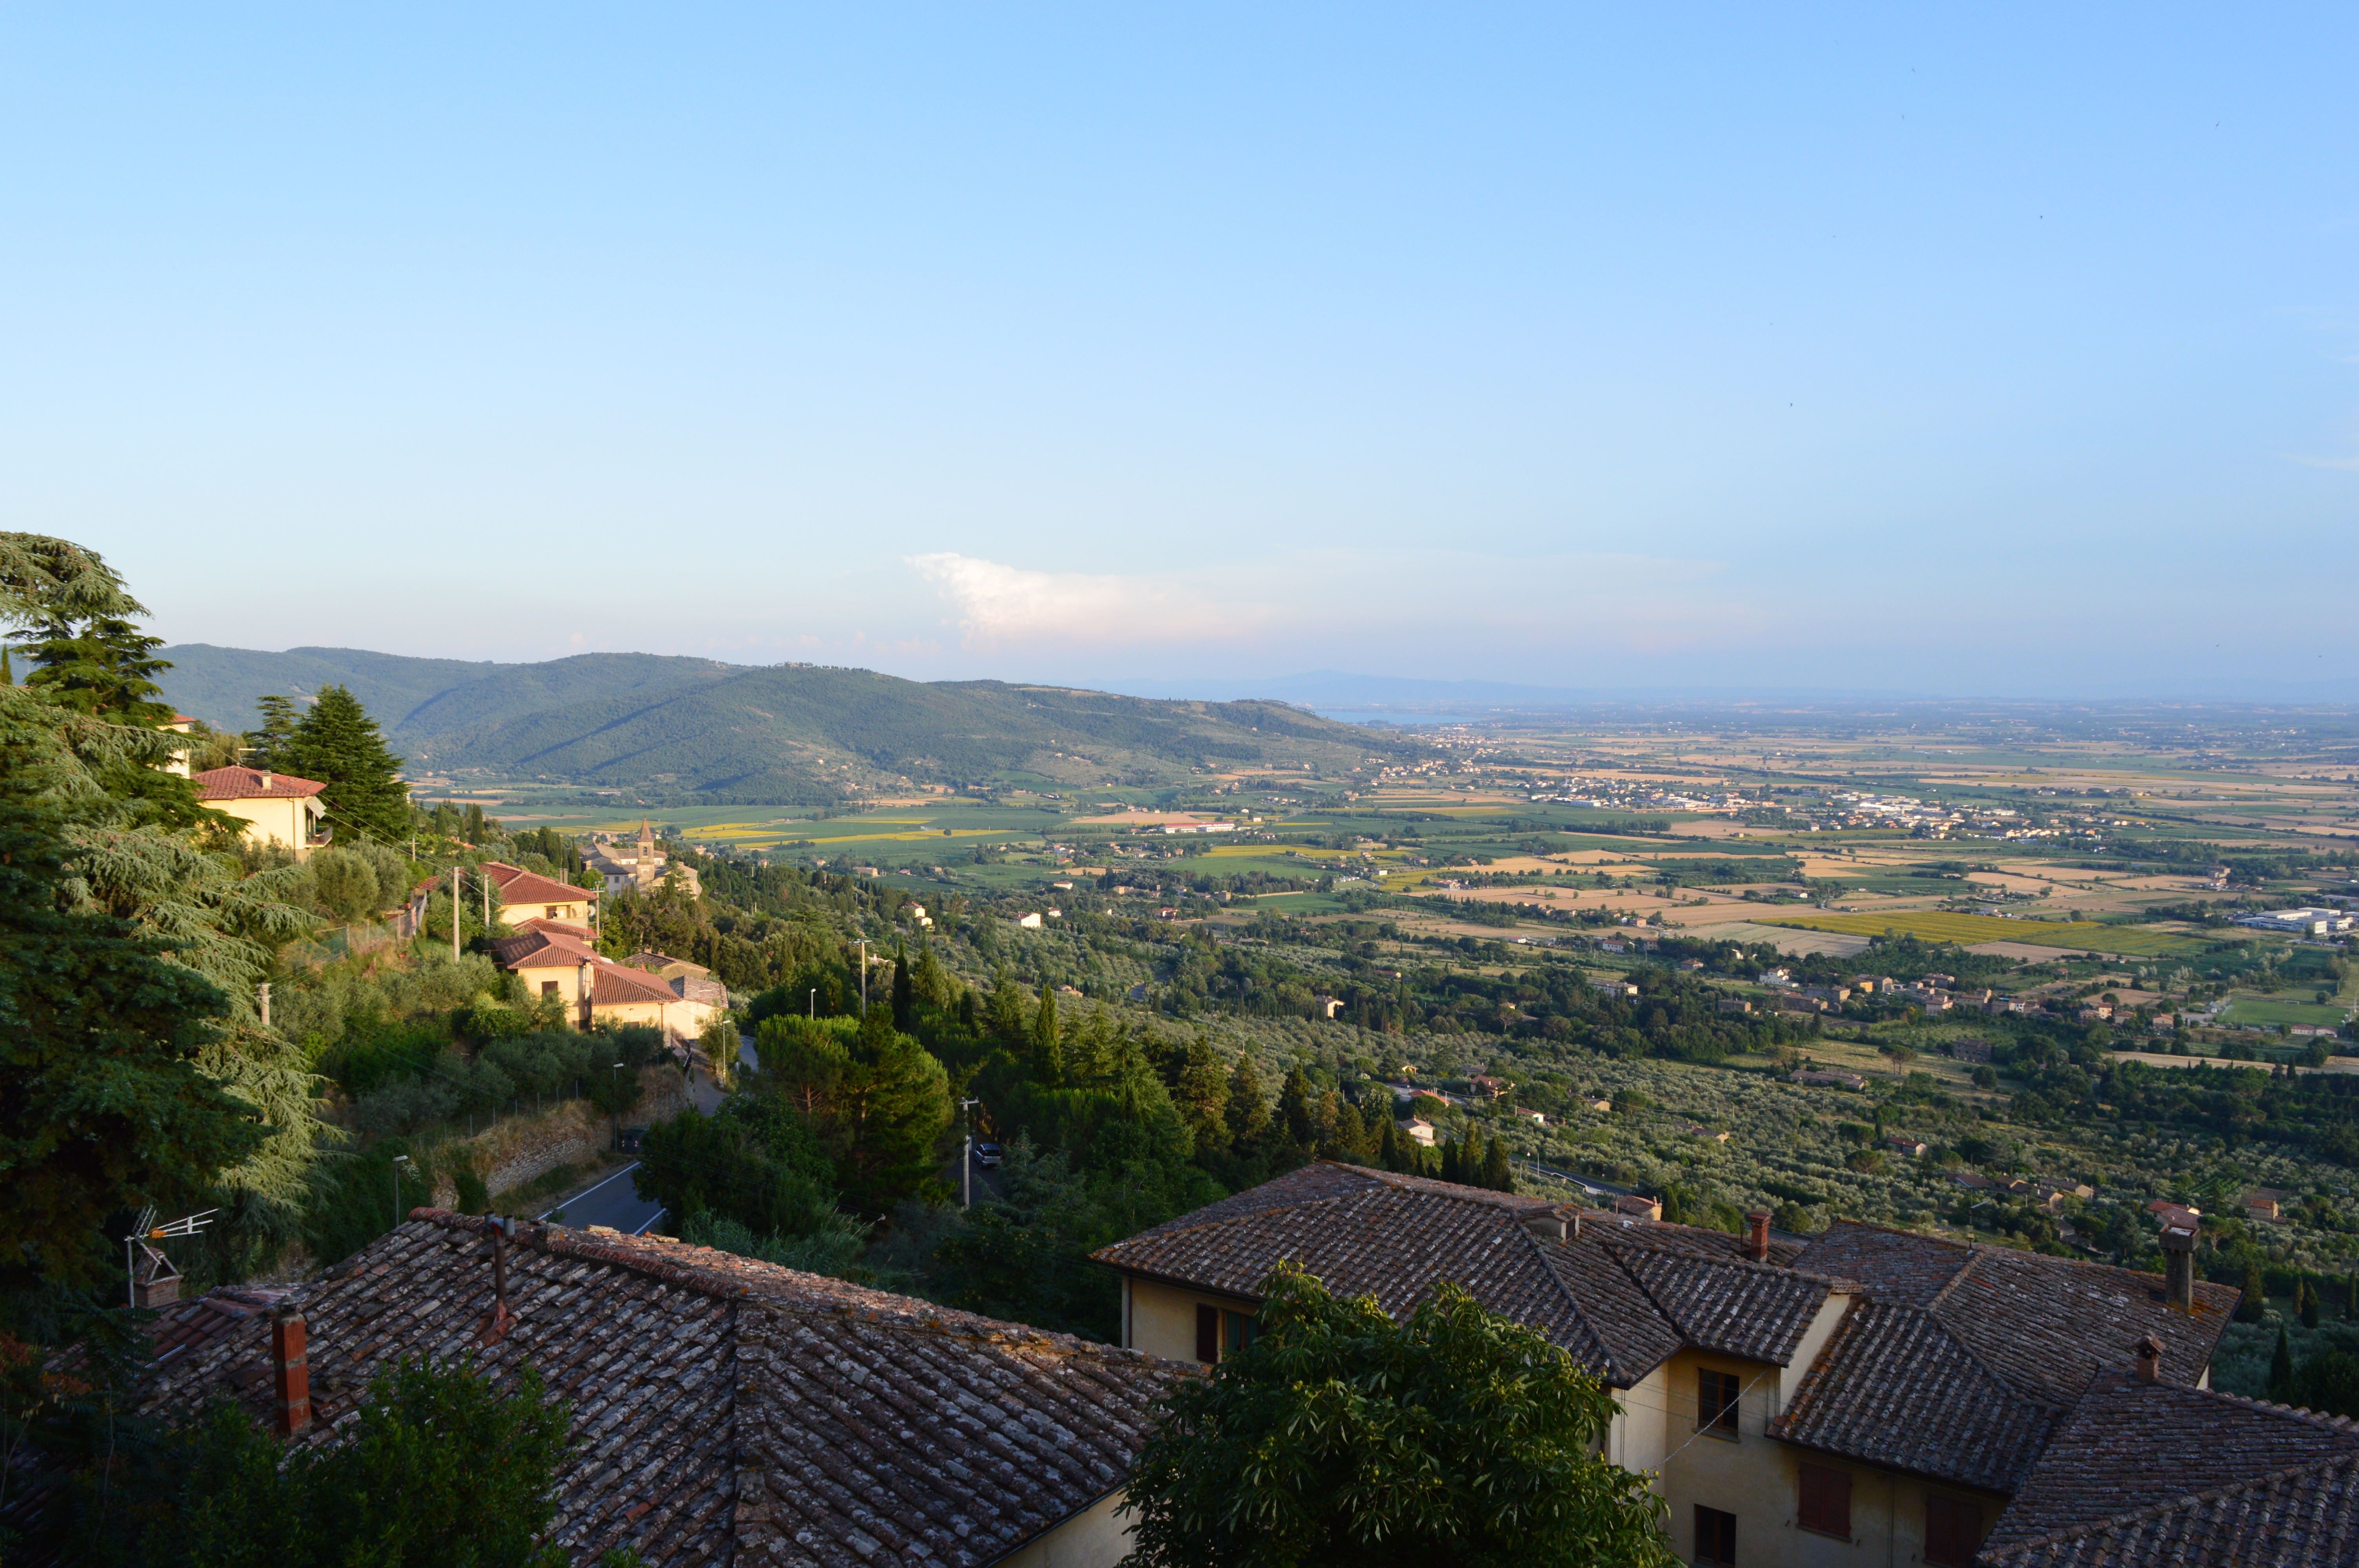 The view from Cortona